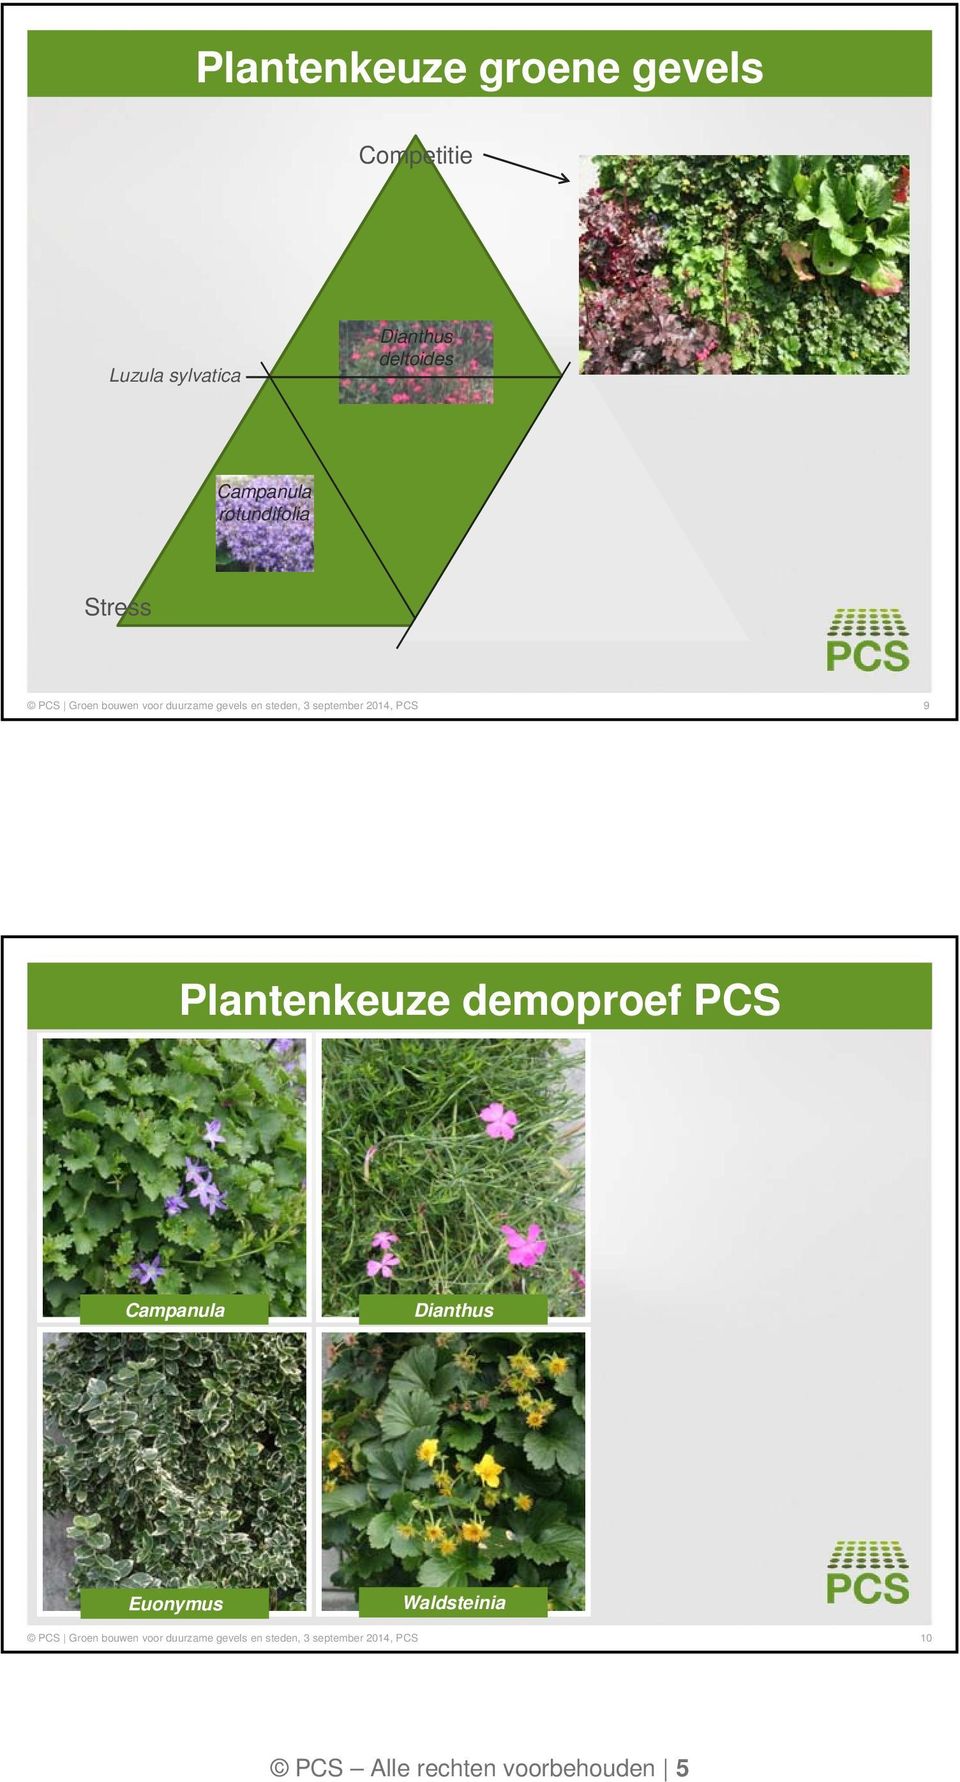 PCS 9 Plantenkeuze demoproef PCS Campanula Dianthus Euonymus Waldsteinia PCS Groen